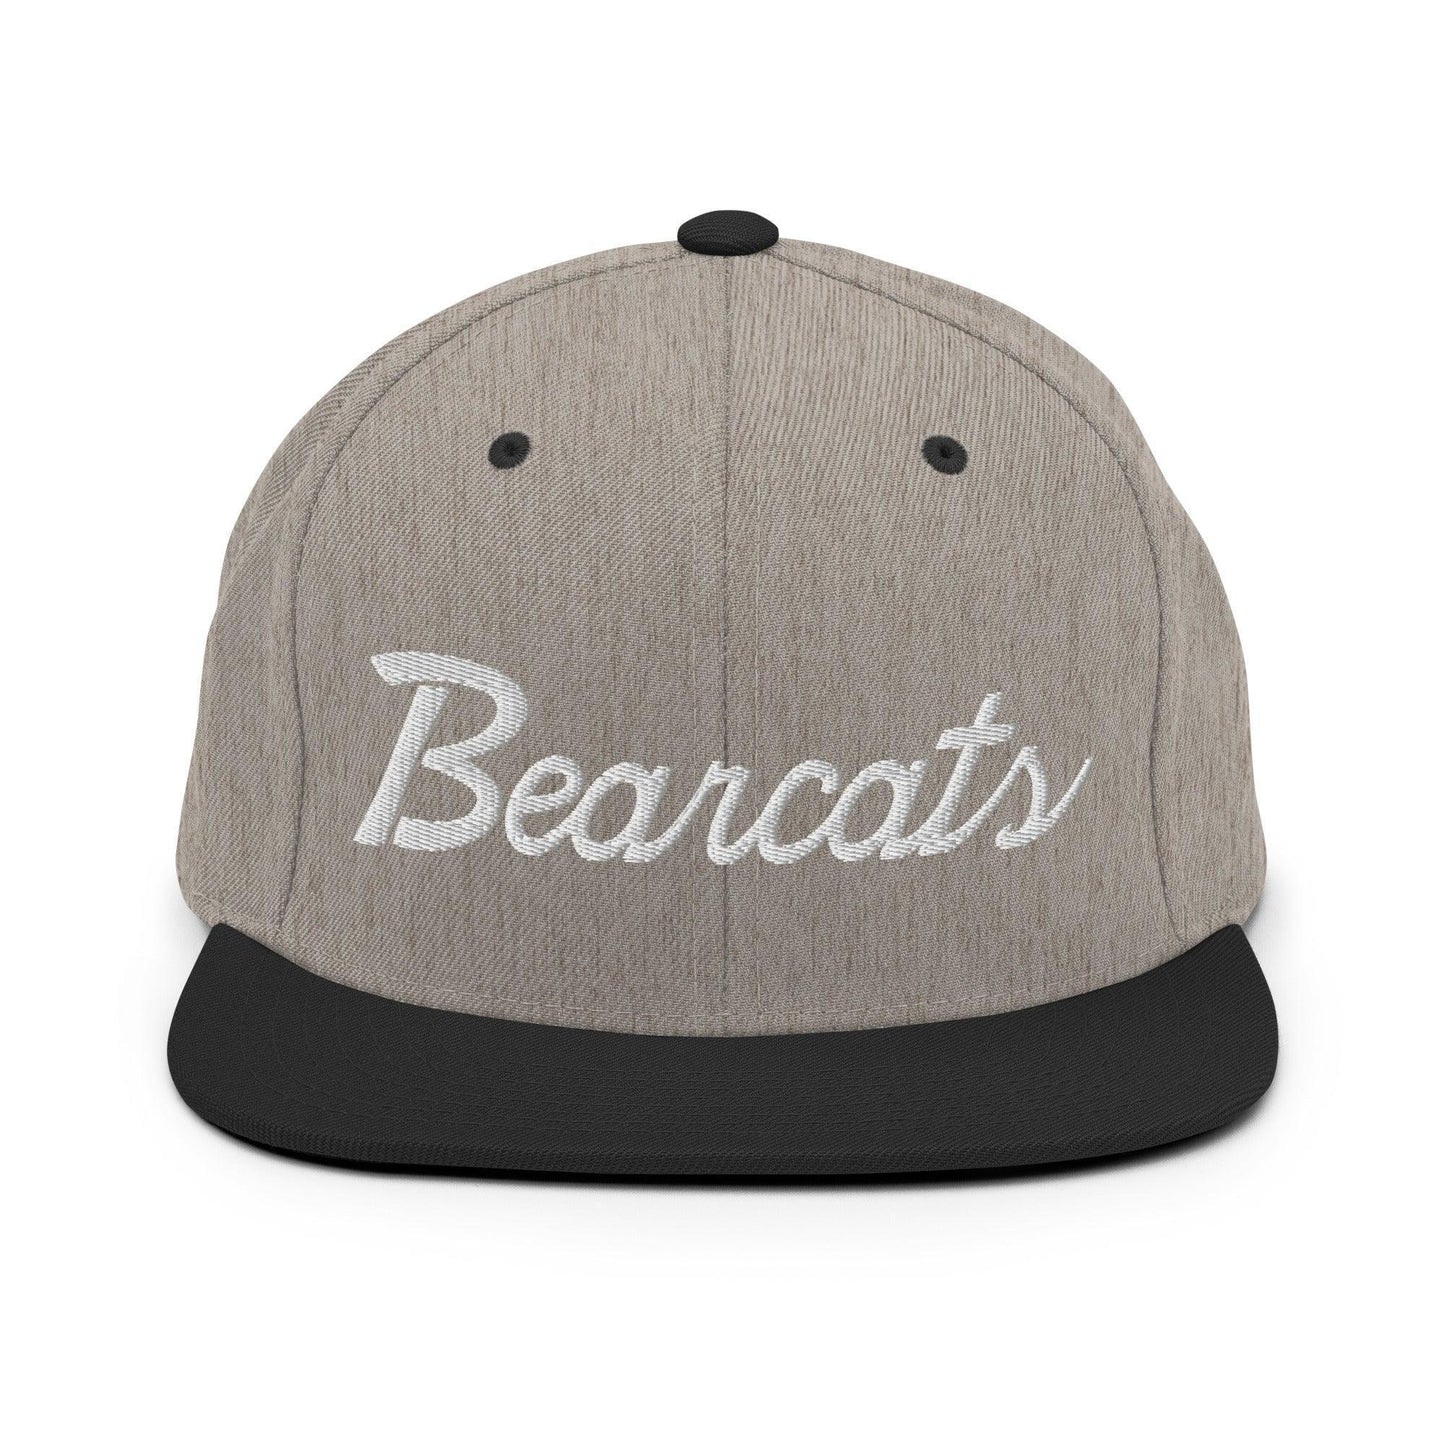 Bearcats School Mascot Script Snapback Hat Heather/Black